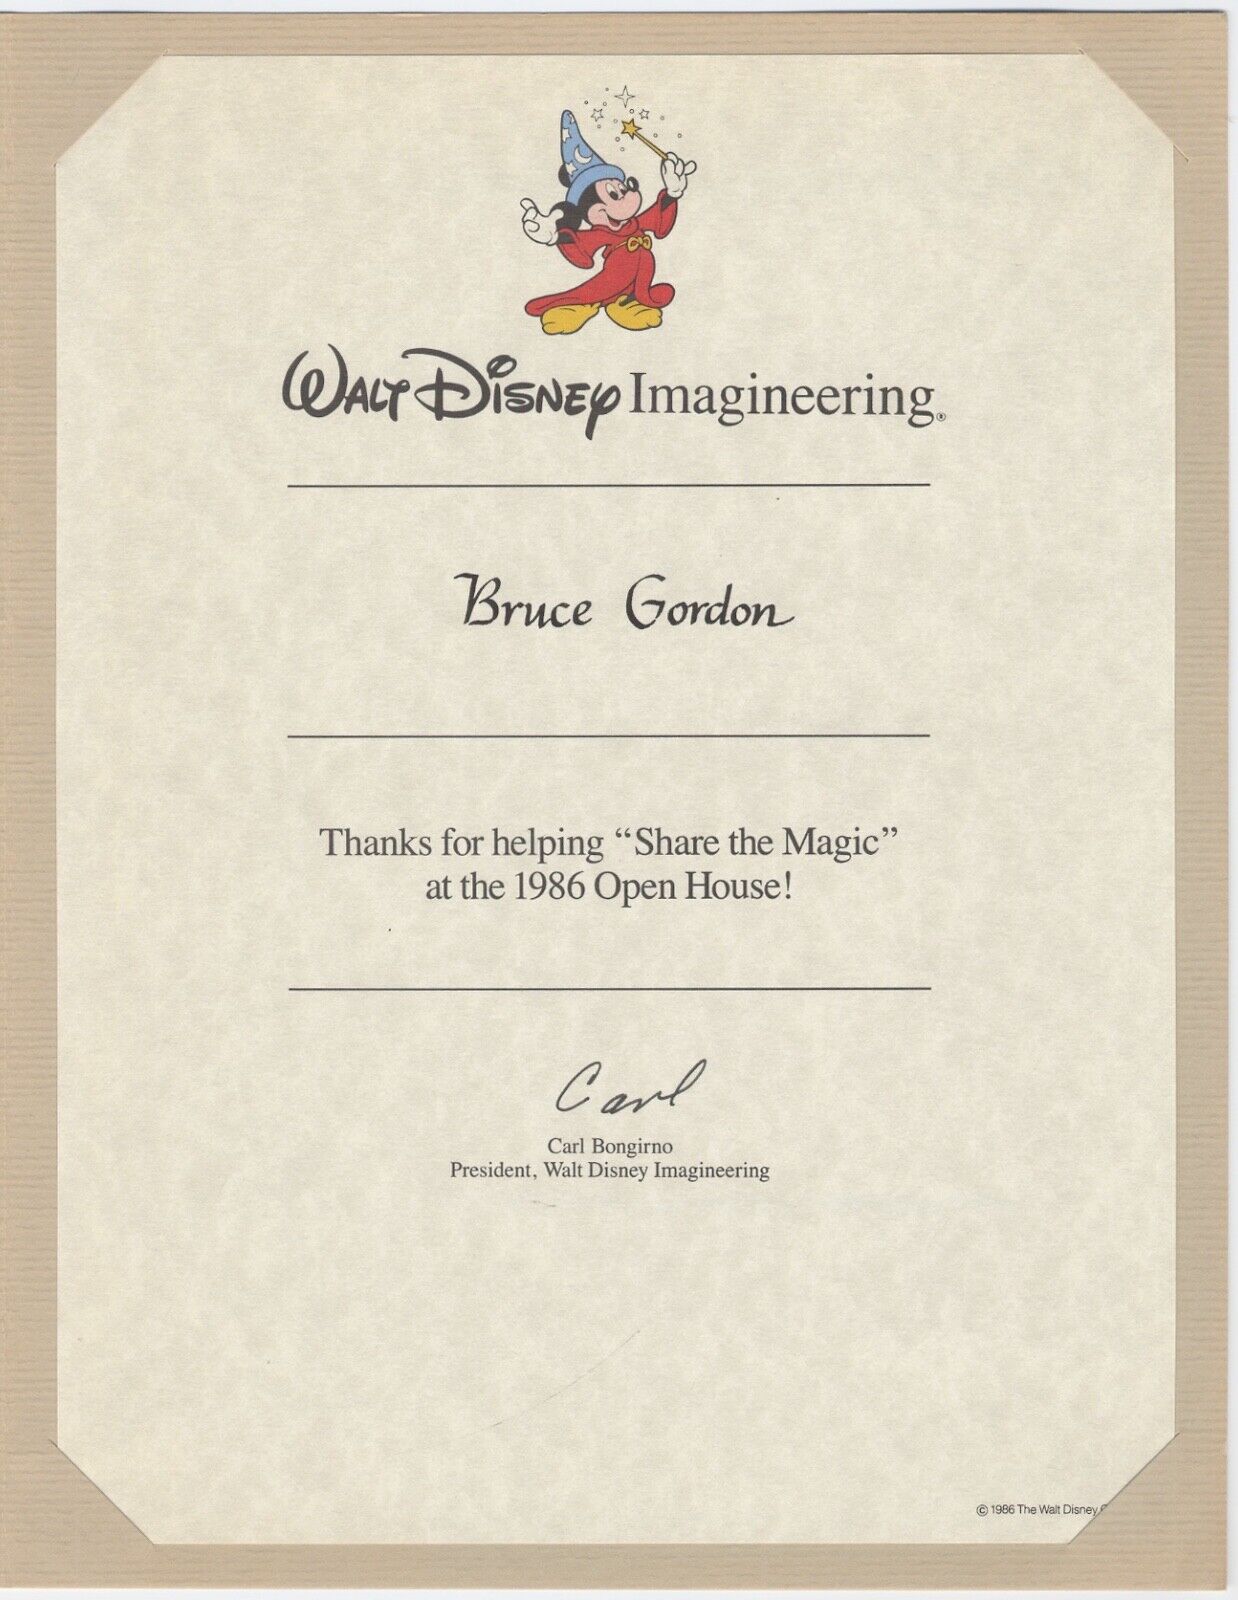 WALT DISNEY IMAGINEERING Certificate for Imagineer BRUCE GORDON, 1986